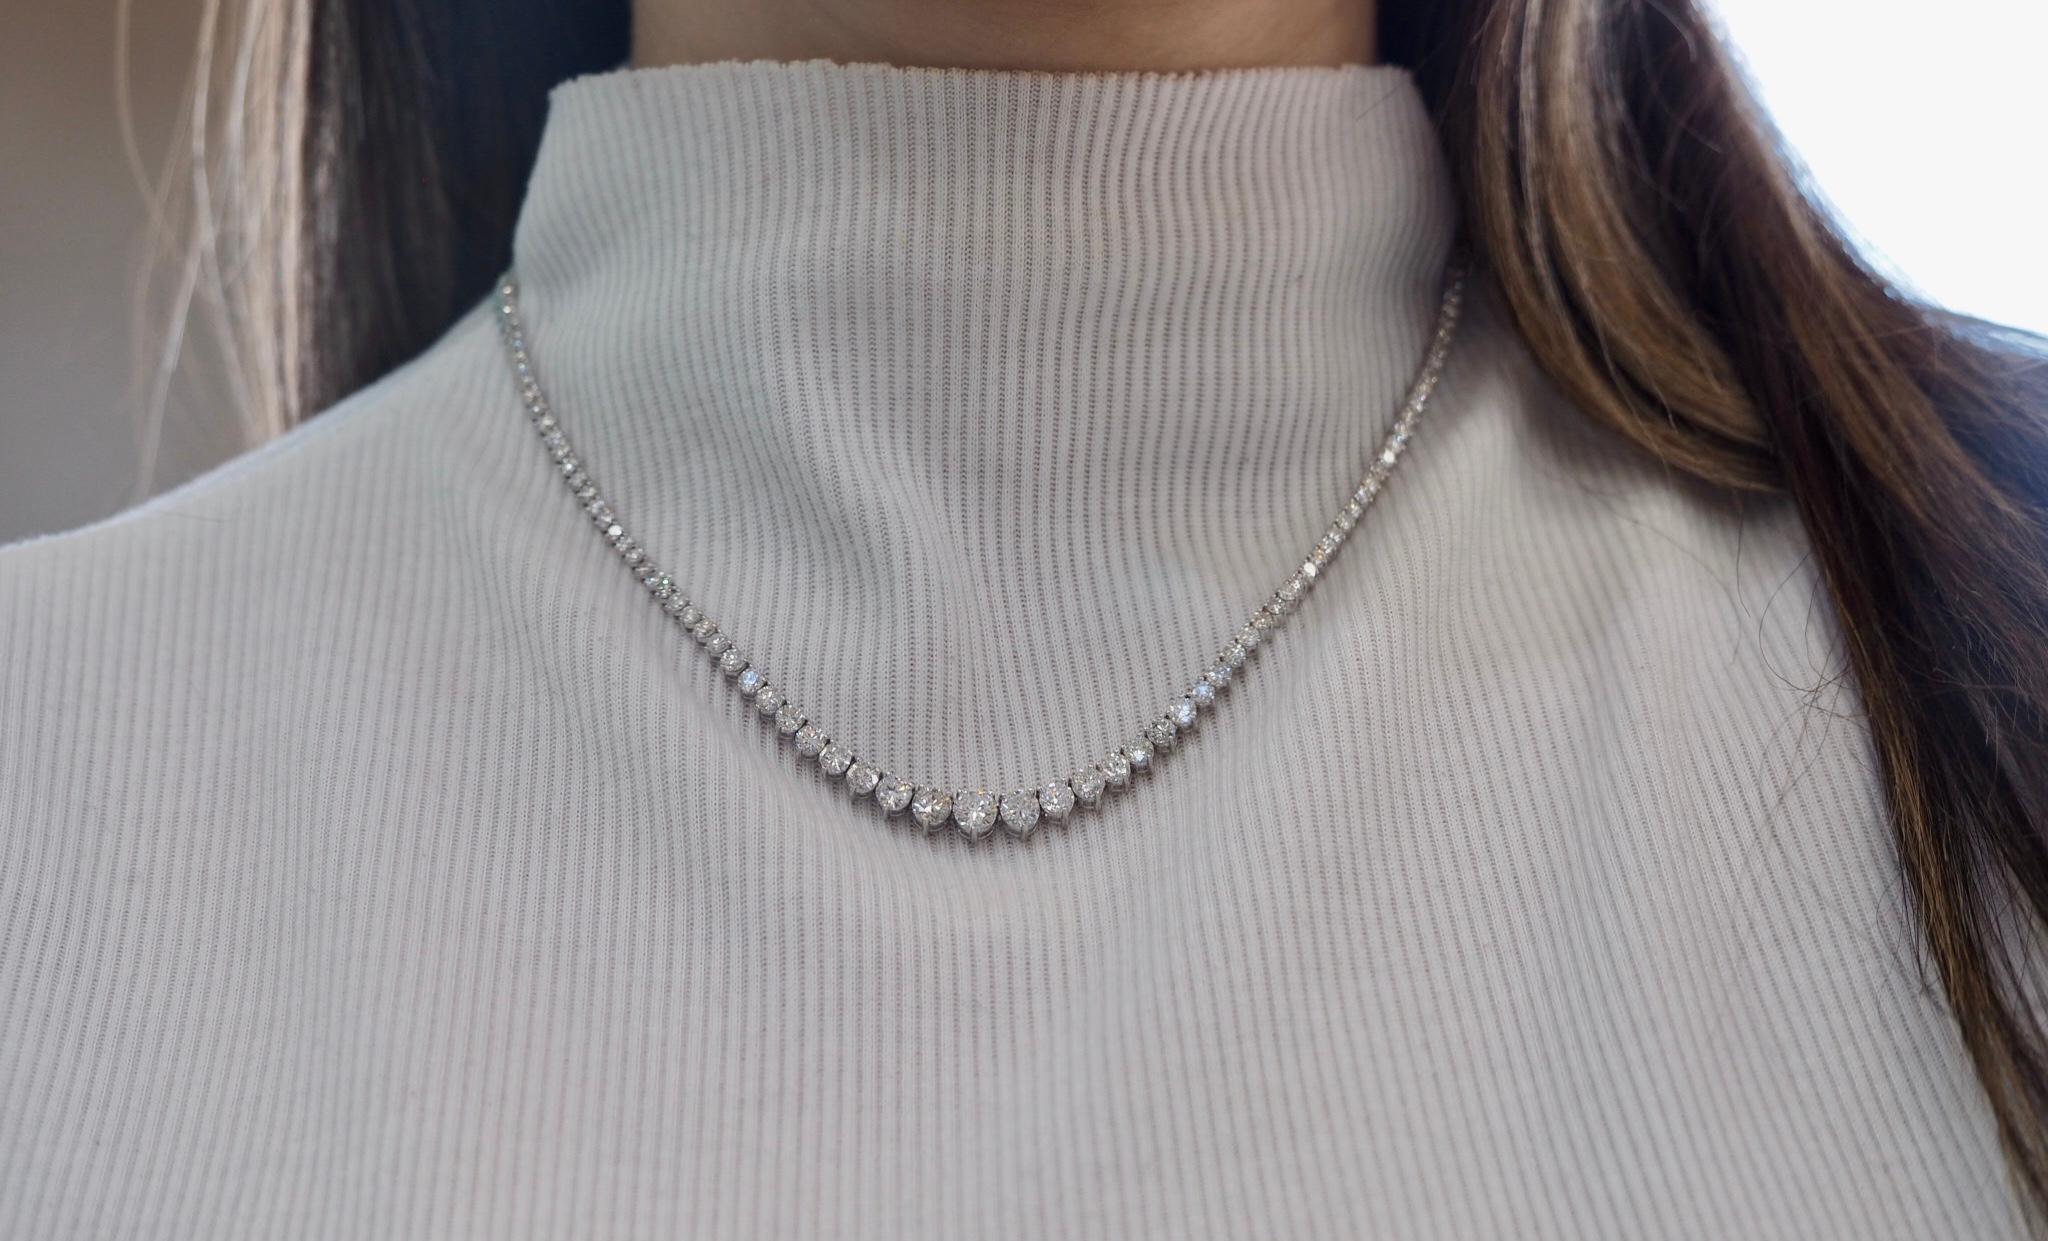 10 carat tennis necklace